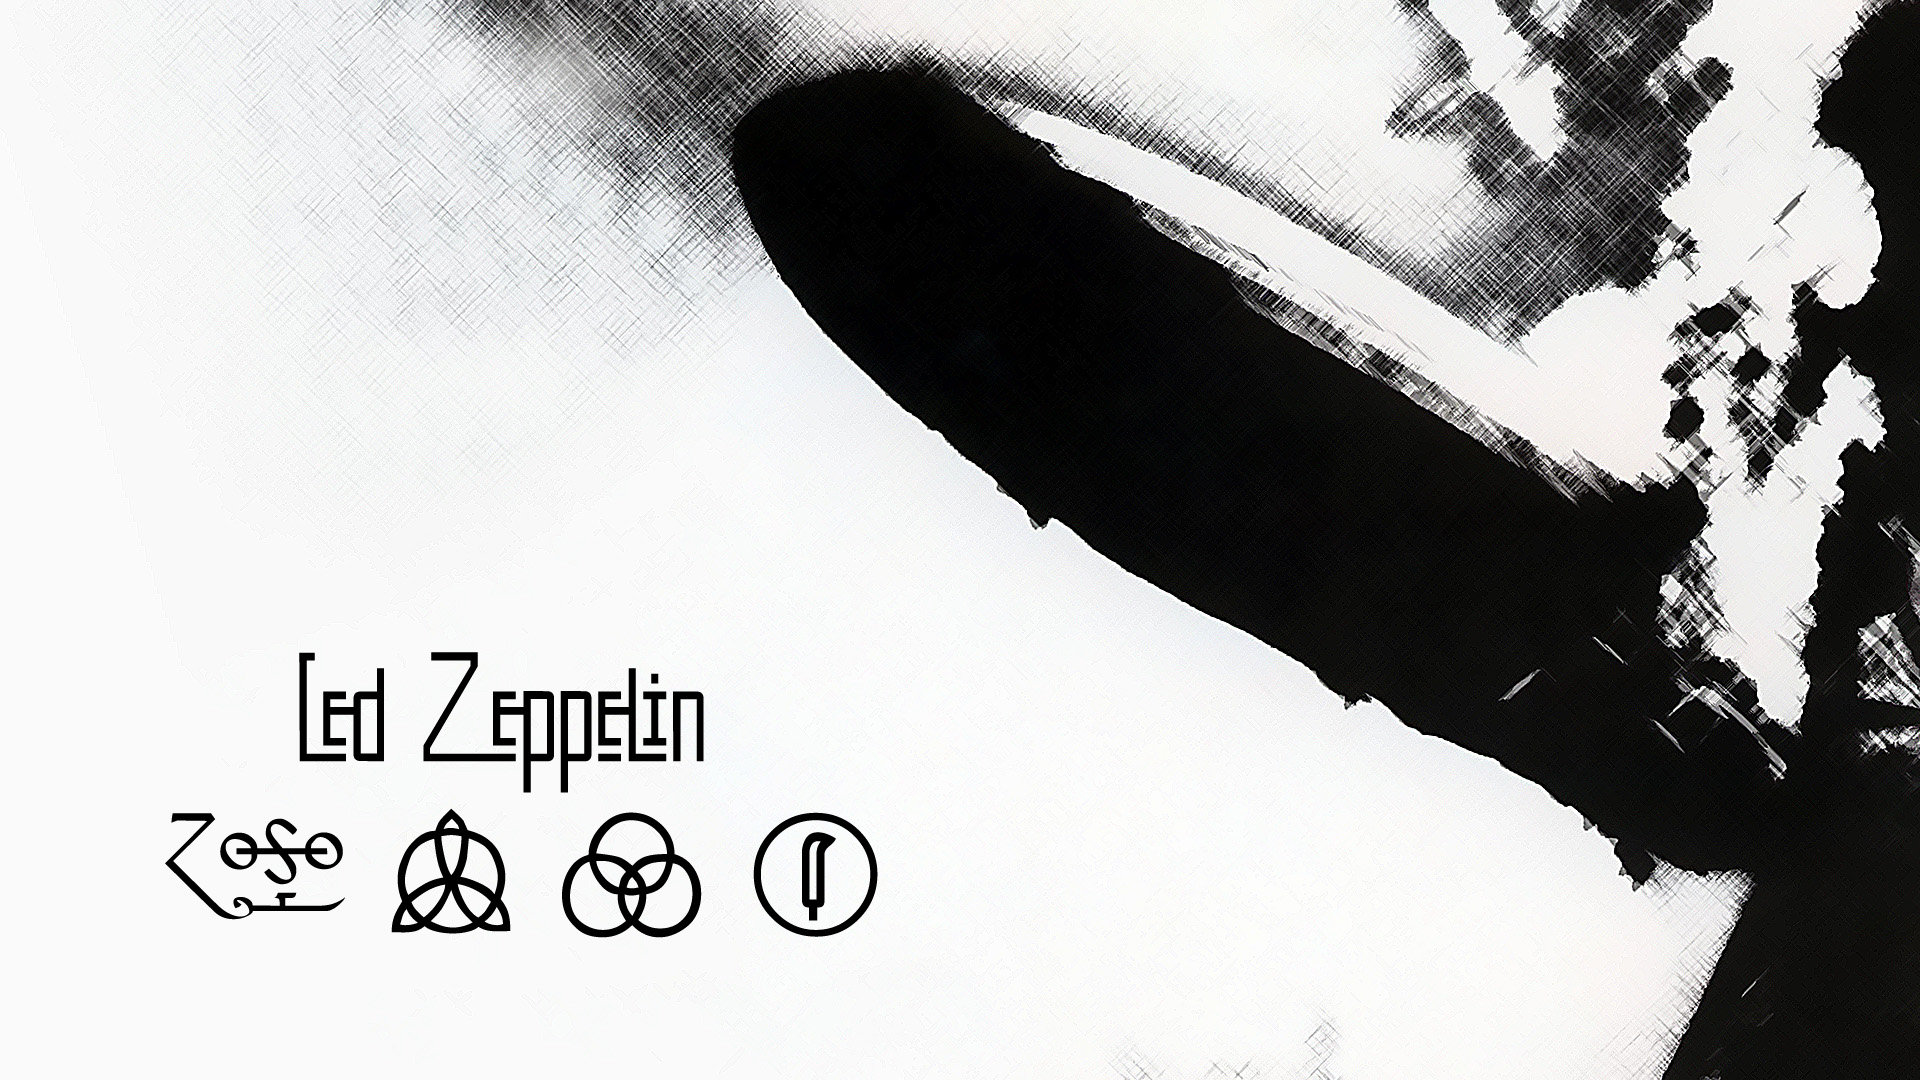 Awesome Led Zeppelin free wallpaper ID:401616 for full hd 1920x1080 desktop